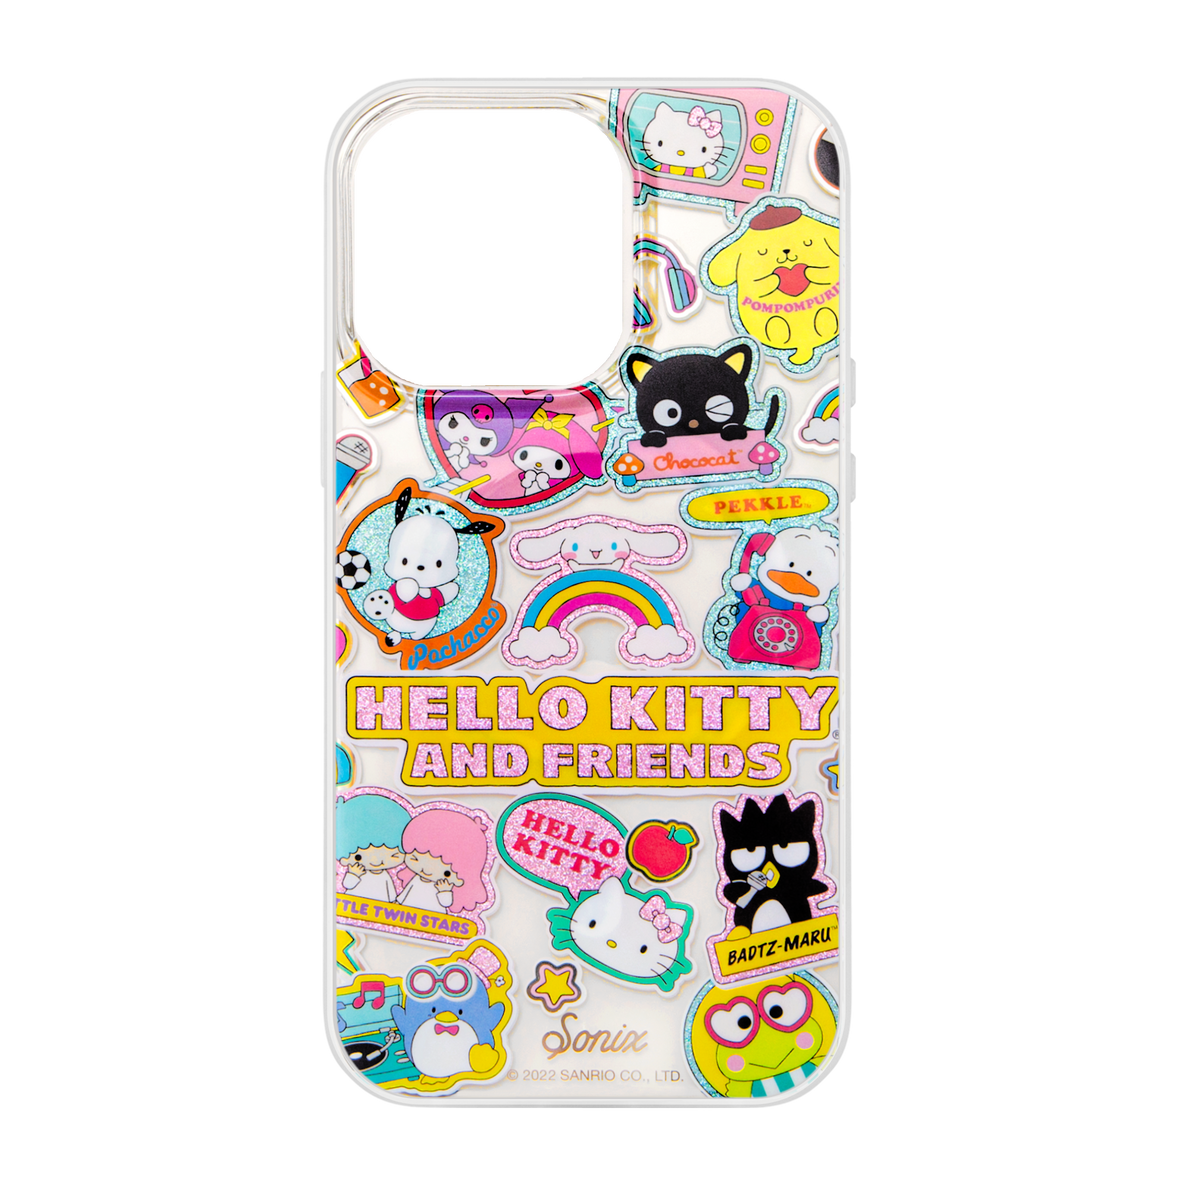 Hello Kitty and Friends x Sonix Supercute Stickers iPhone Case Accessory BySonix Inc.   